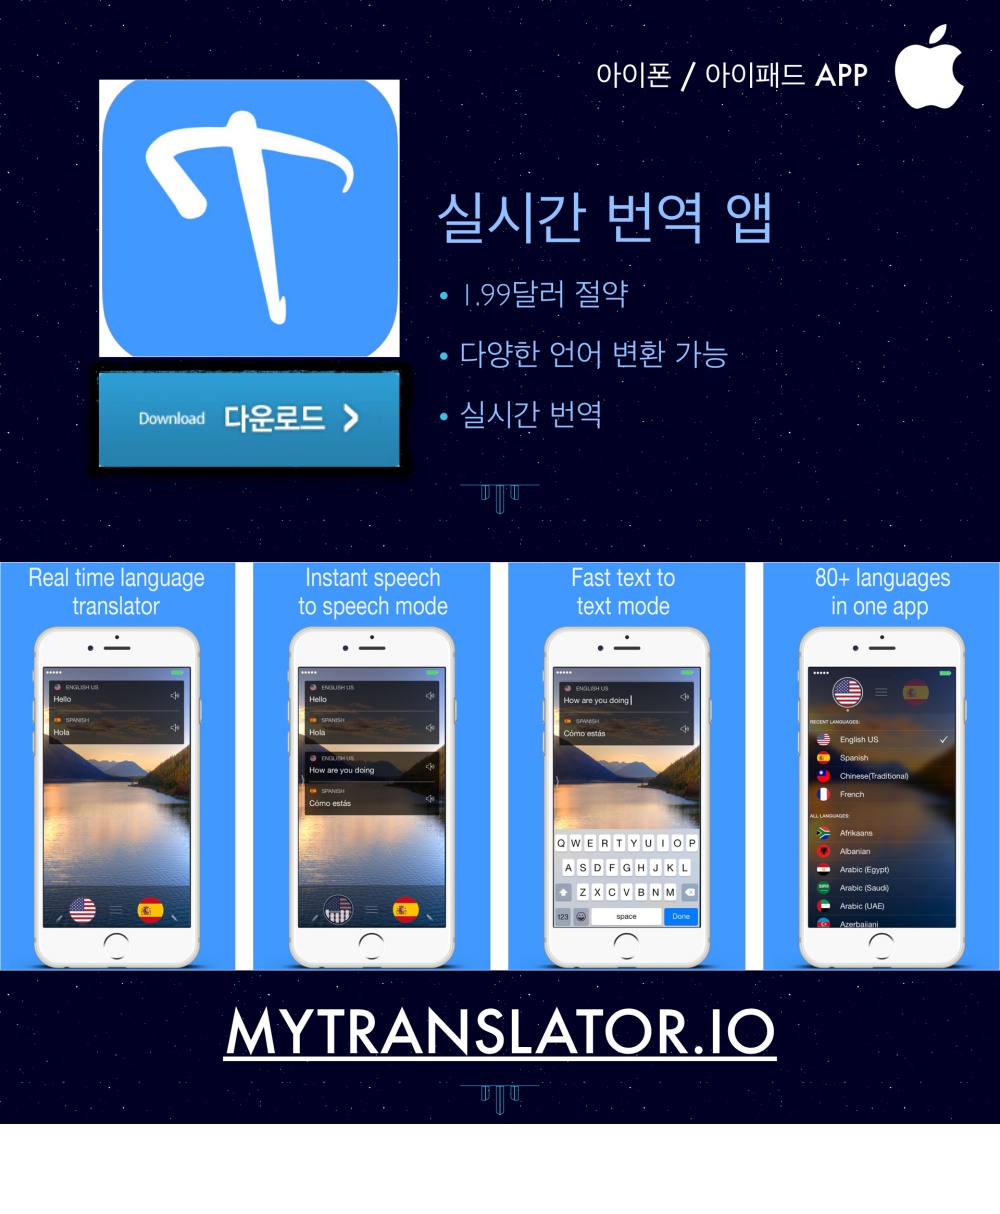 https://itunes.apple.com/kr/app/mytranslator.io-real-time/id979573072?mt=8